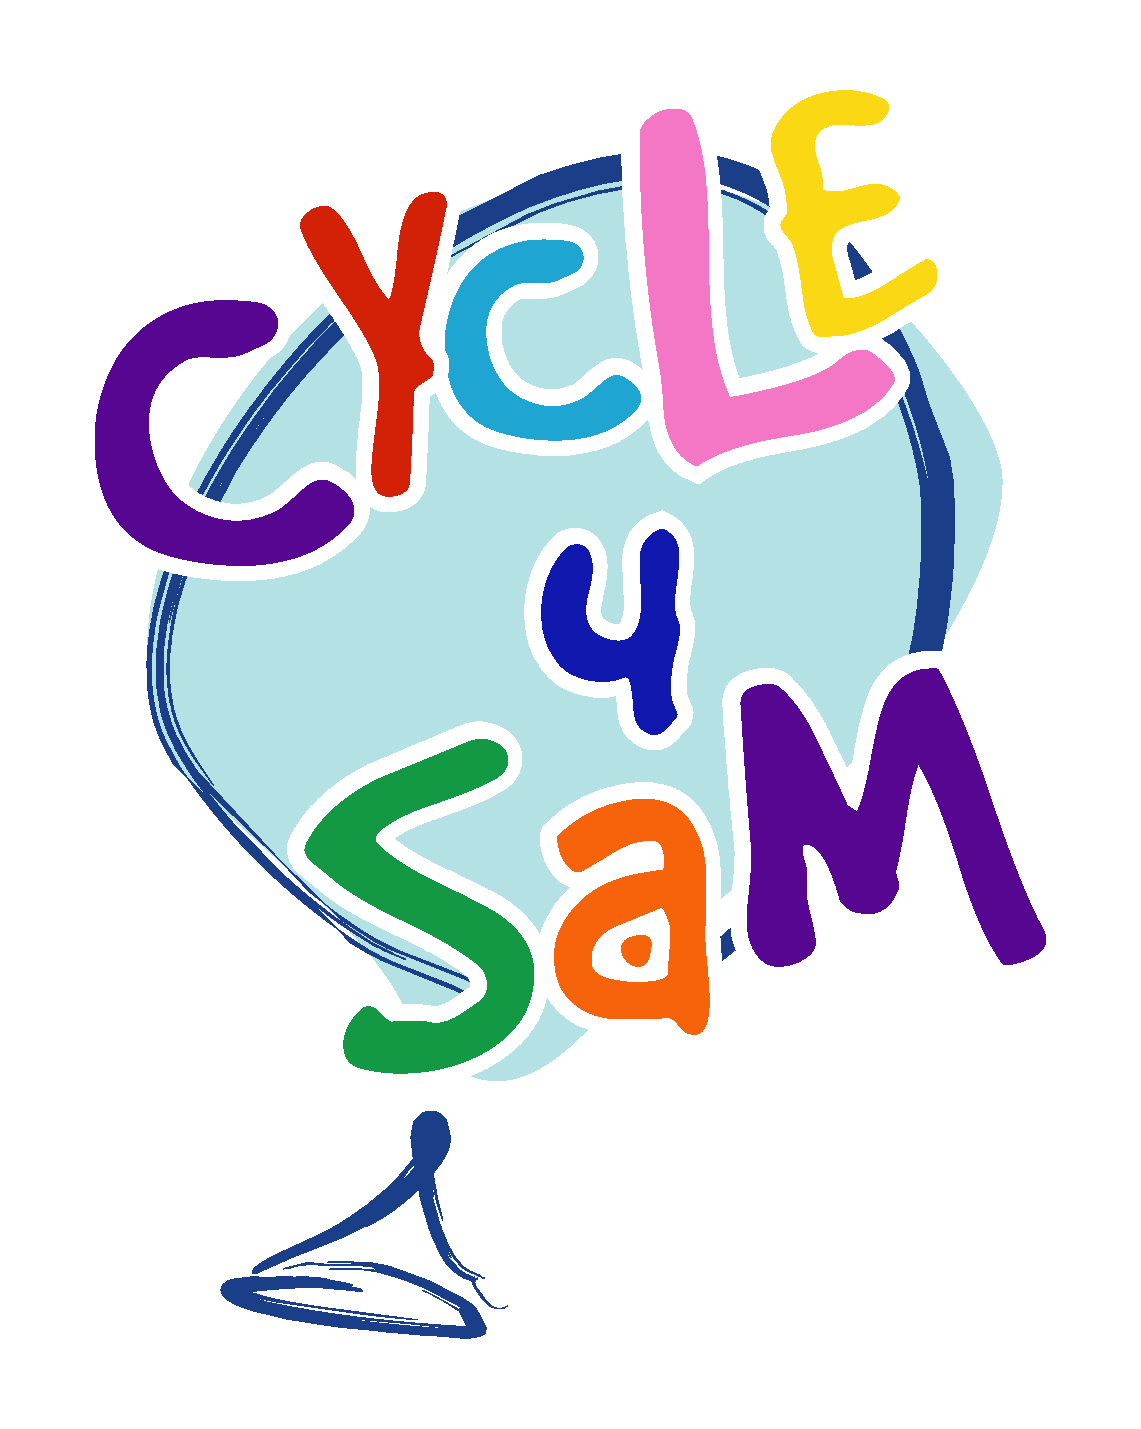 Cycle4Sam